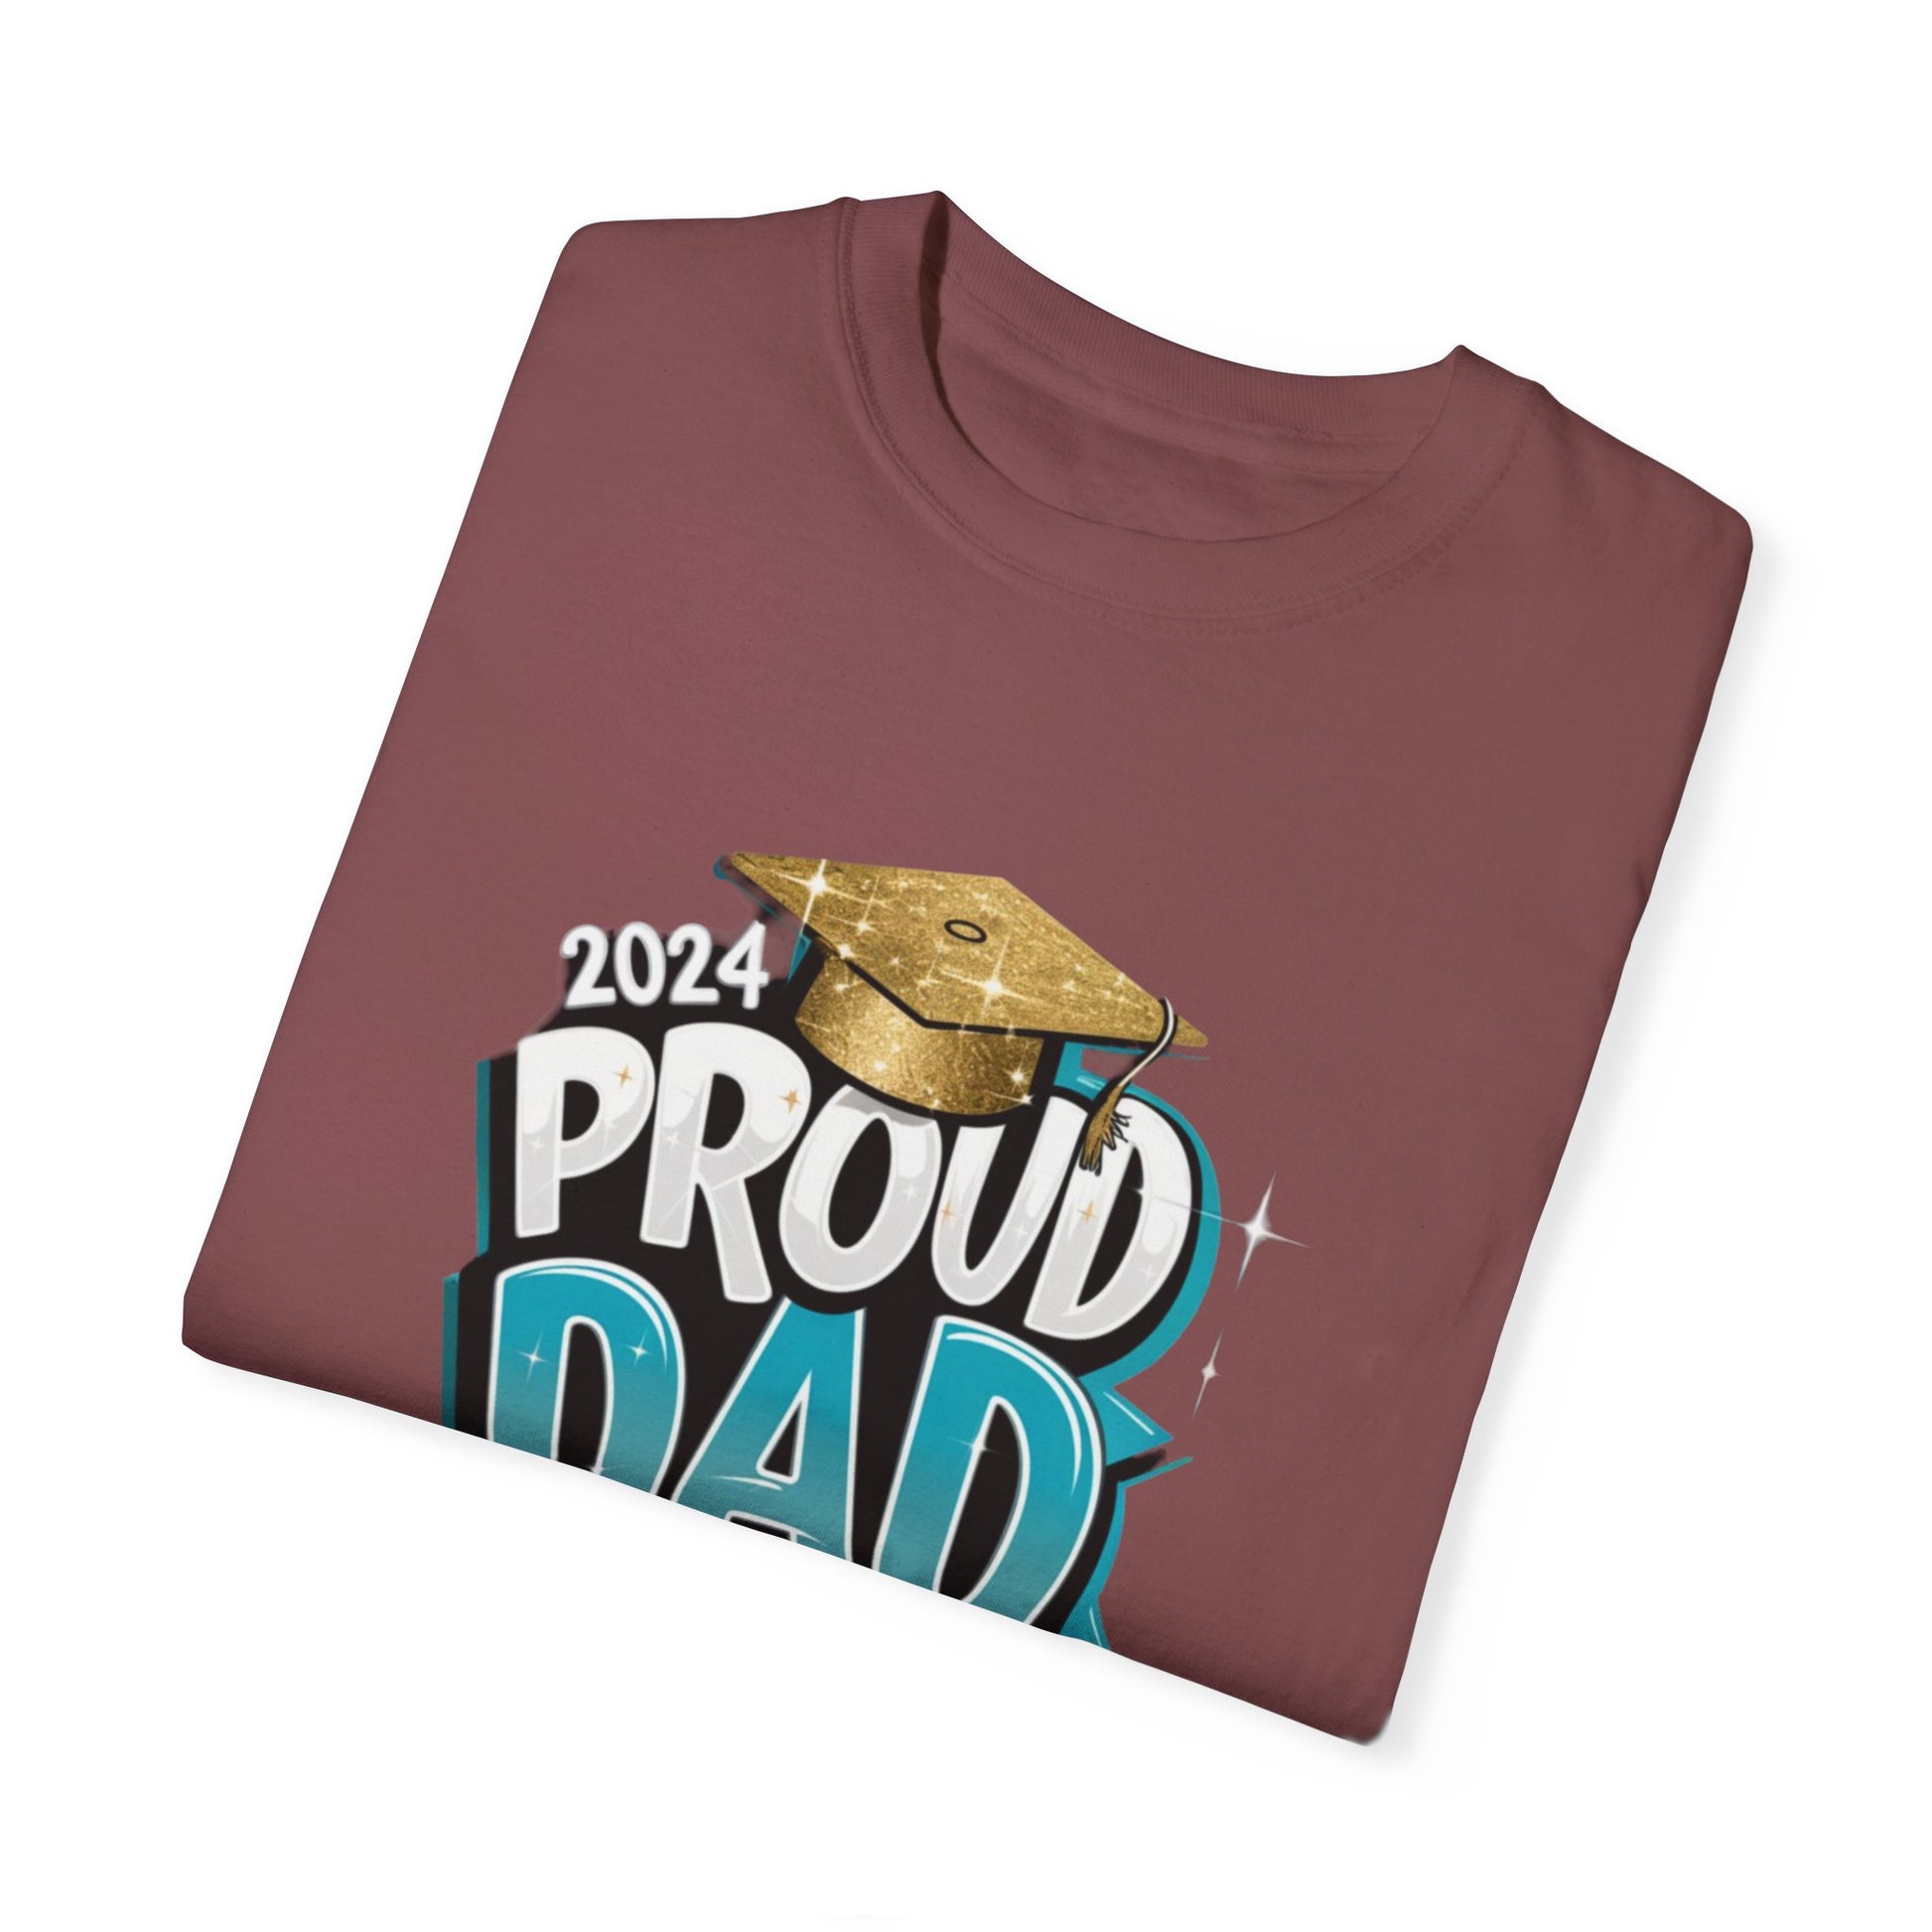 Proud Dad of a 2024 Graduate Unisex Garment-dyed T-shirt Cotton Funny Humorous Graphic Soft Premium Unisex Men Women Brick T-shirt Birthday Gift-29